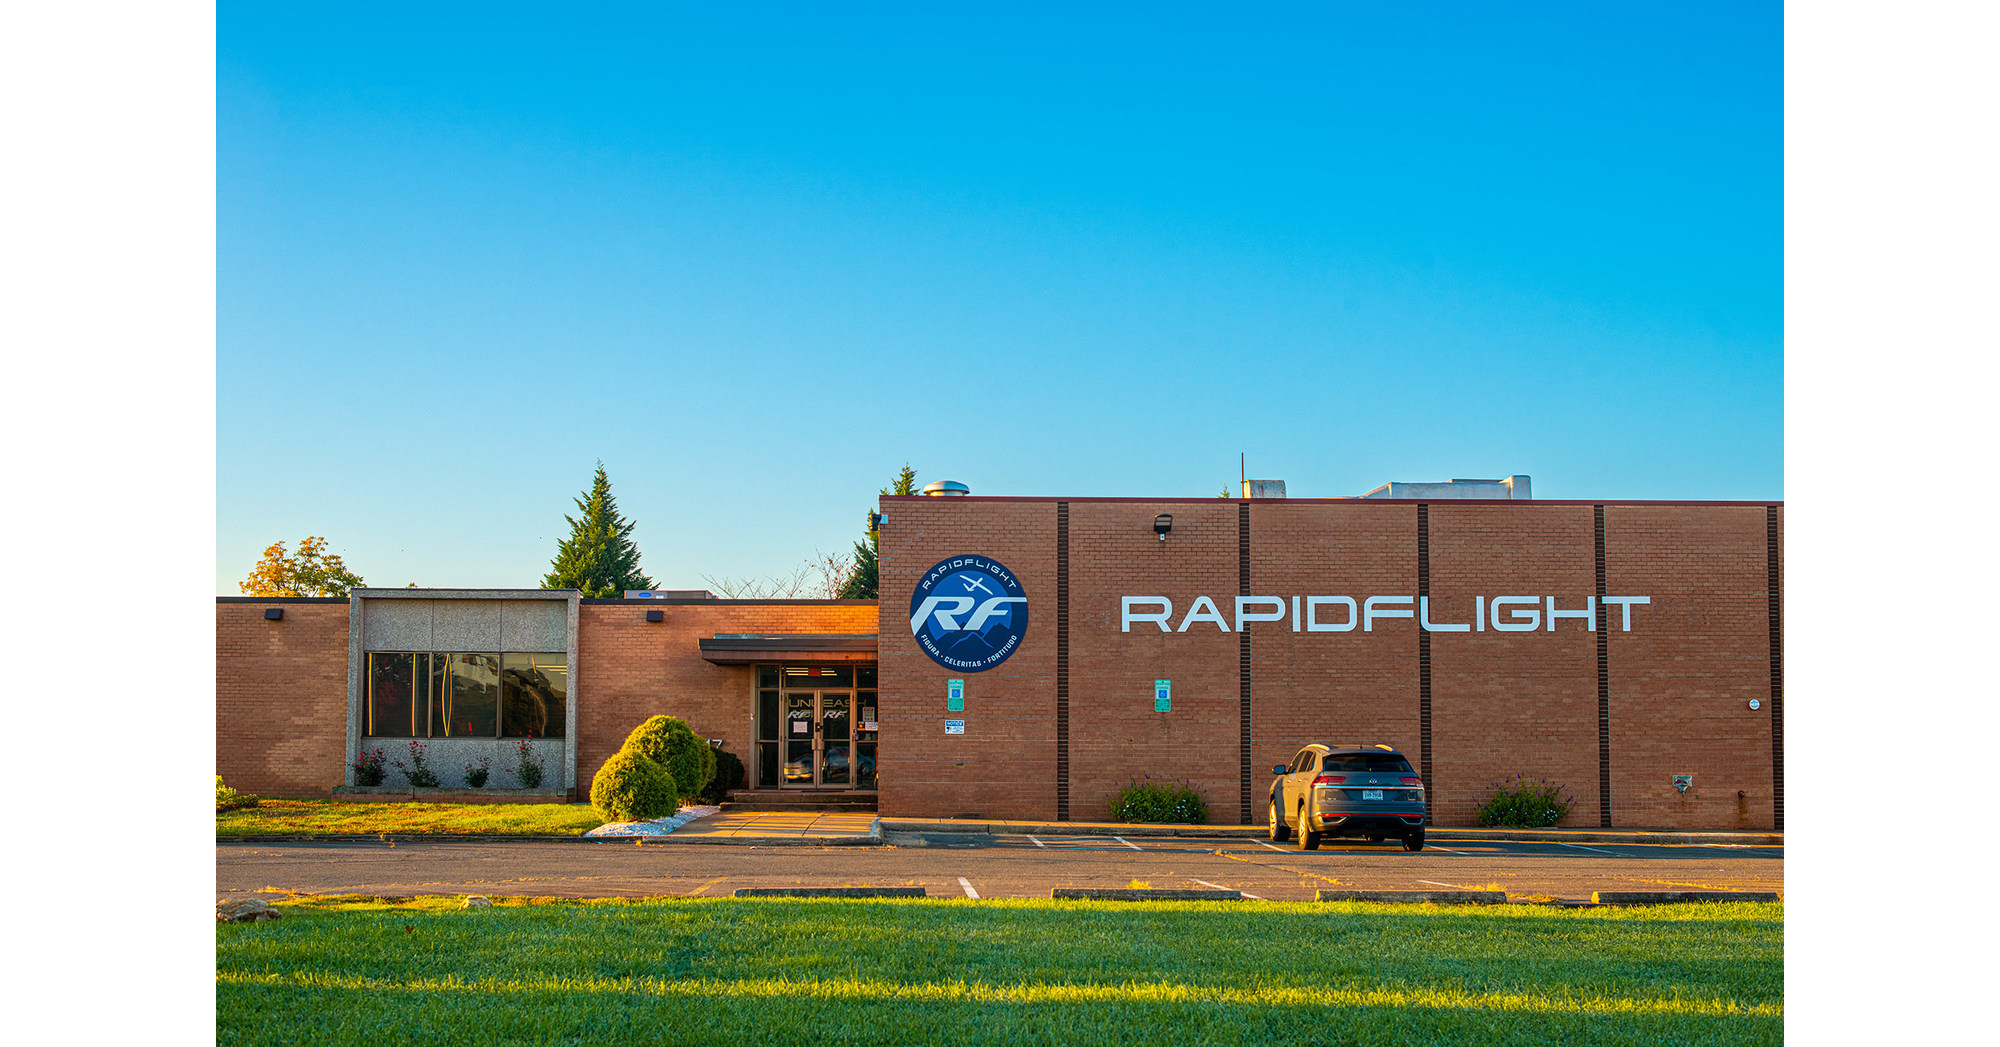   
																RapidFlight receives grant for improvements to Manassas Headquarters 
															 